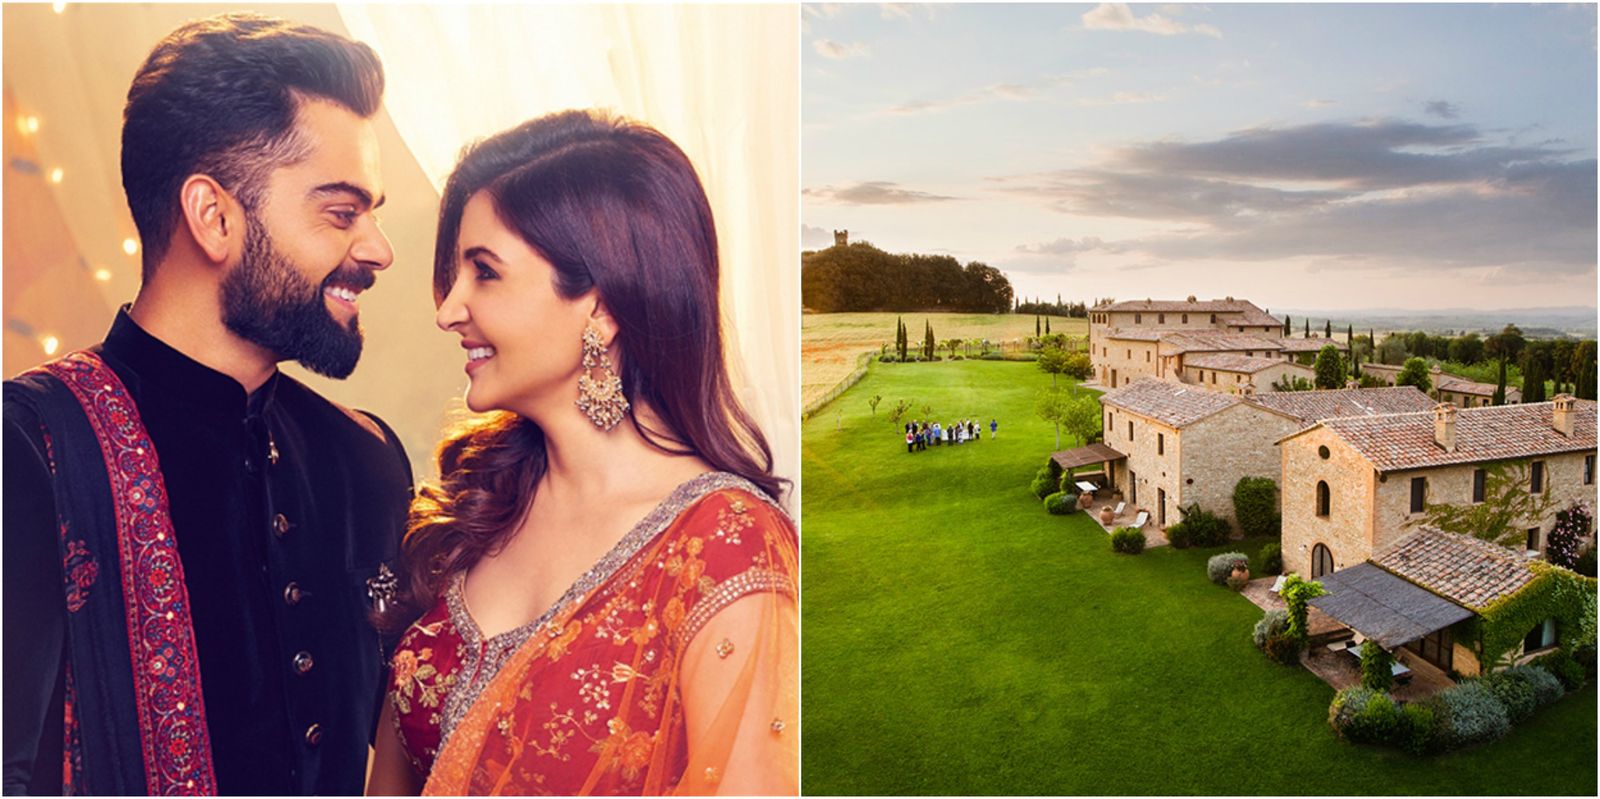 Virushka Wedding: Check Out The Villa Where Virat Kohli And Anushka Sharma Tied The Knot!